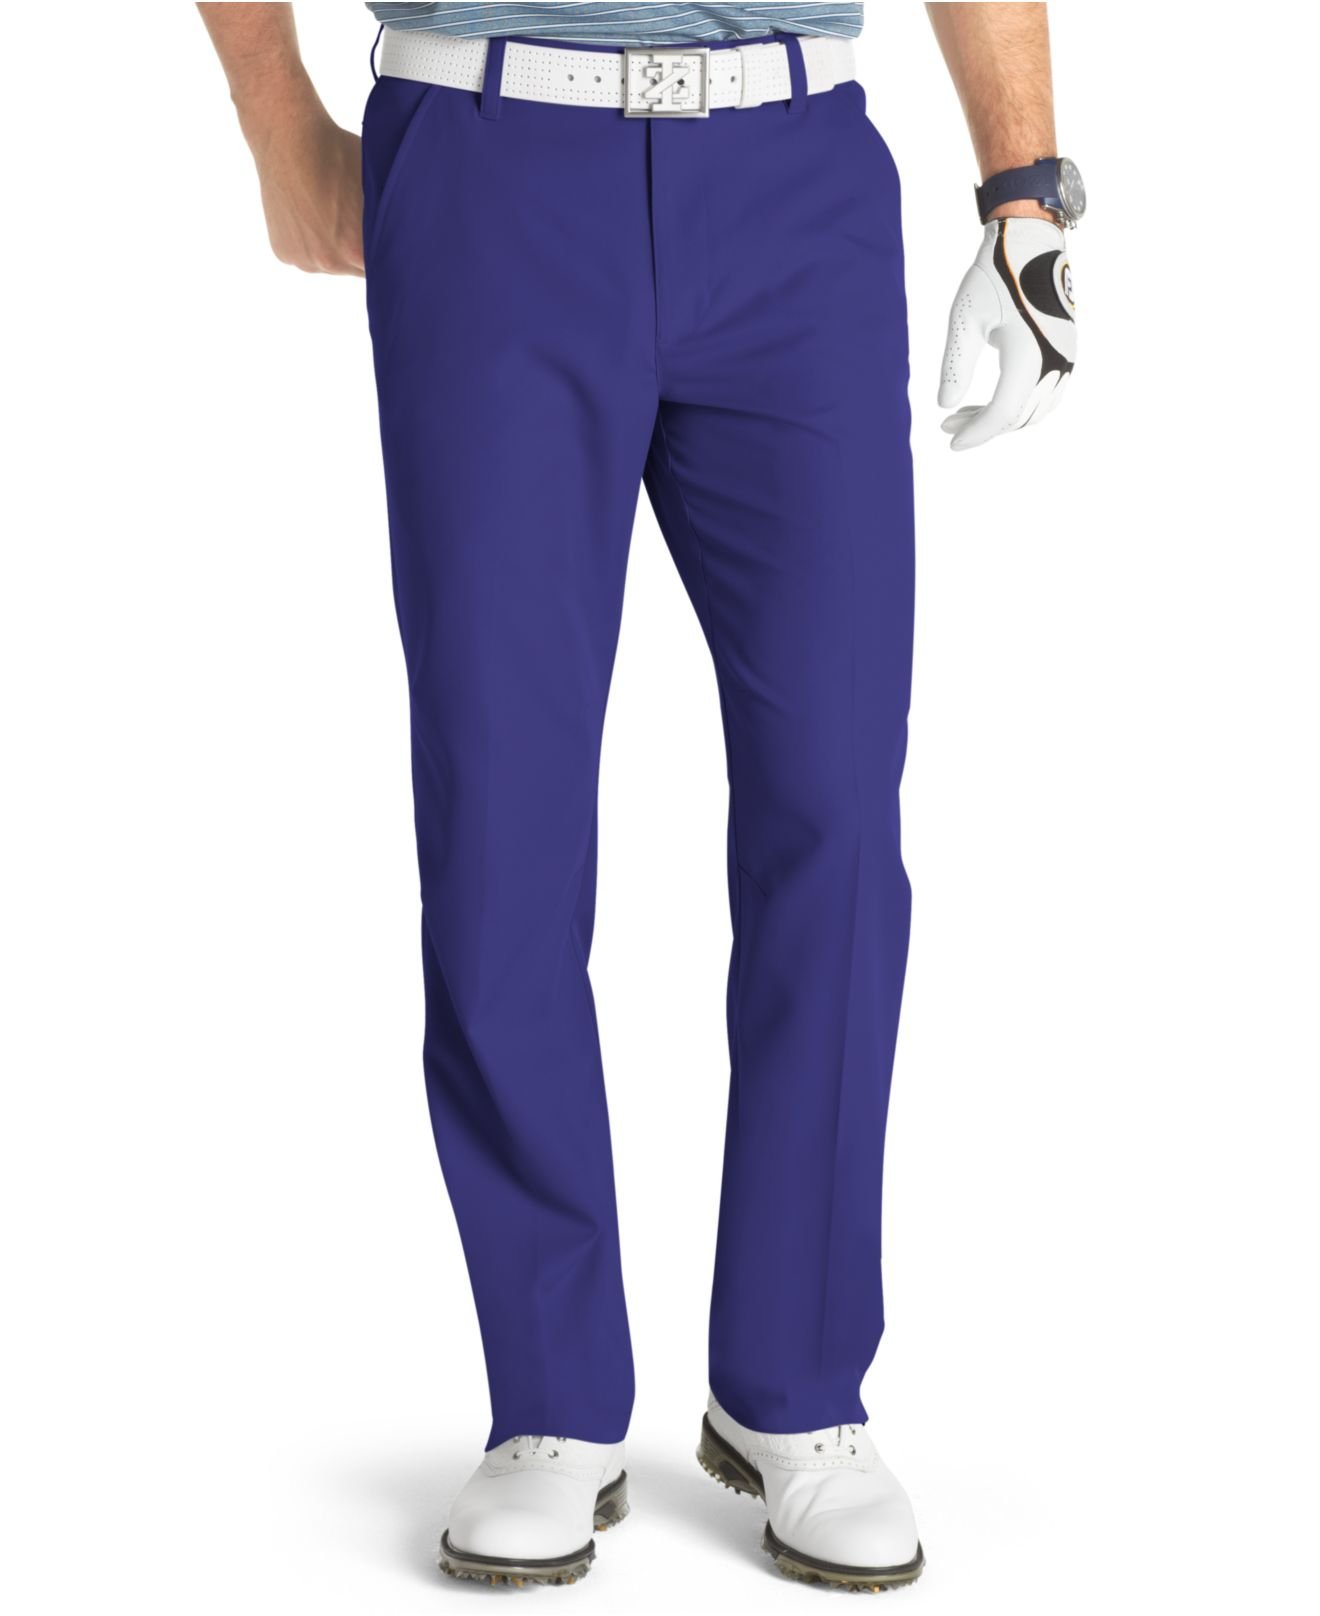 Lyst - Izod Golf Pants, Slim-fit Flat Front Pants in Blue for Men